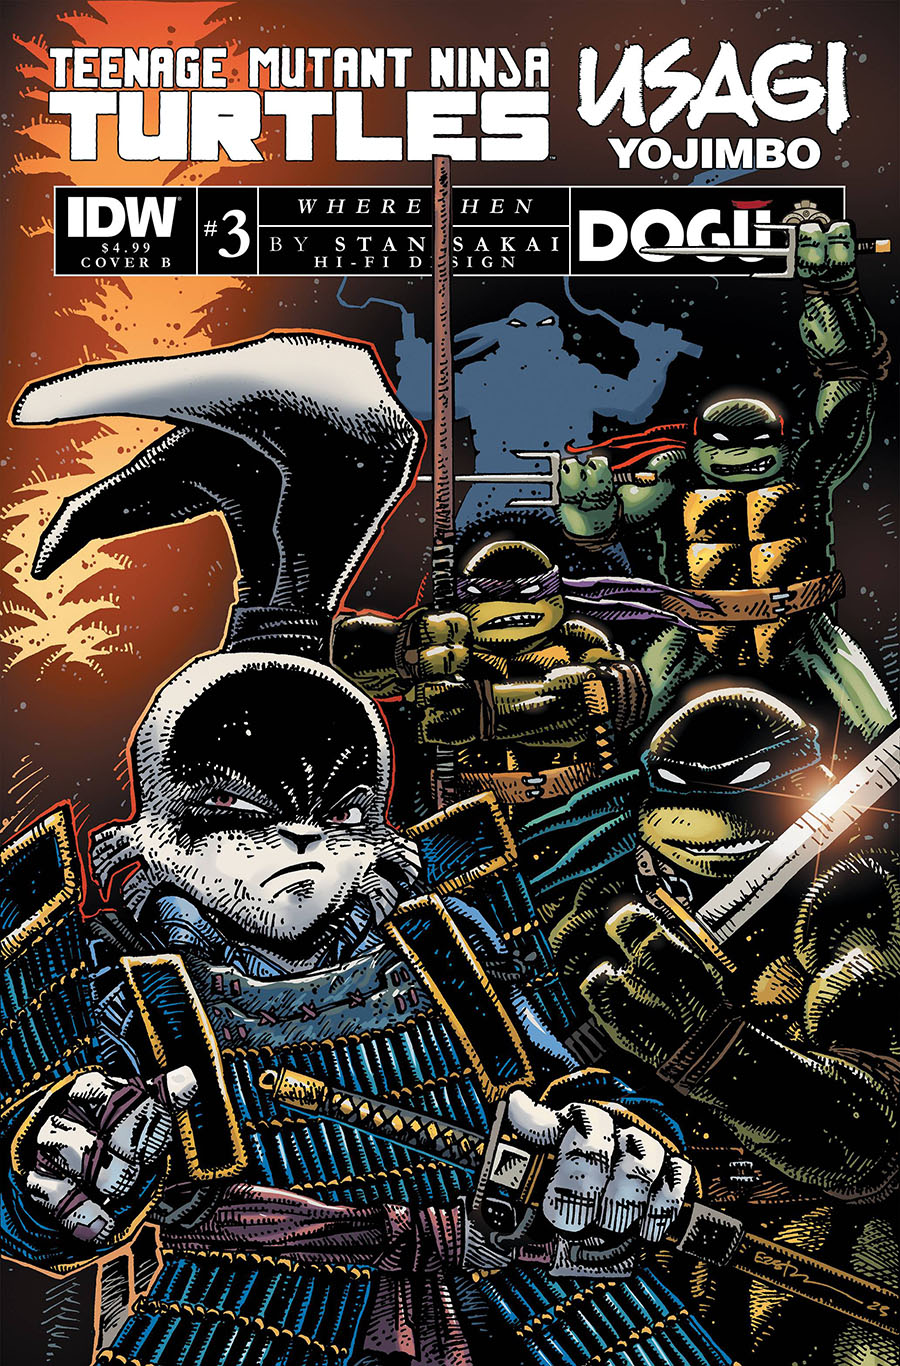 Teenage Mutant Ninja Turtles Usagi Yojimbo WhereWhen #3 Cover B Variant Kevin Eastman Cover